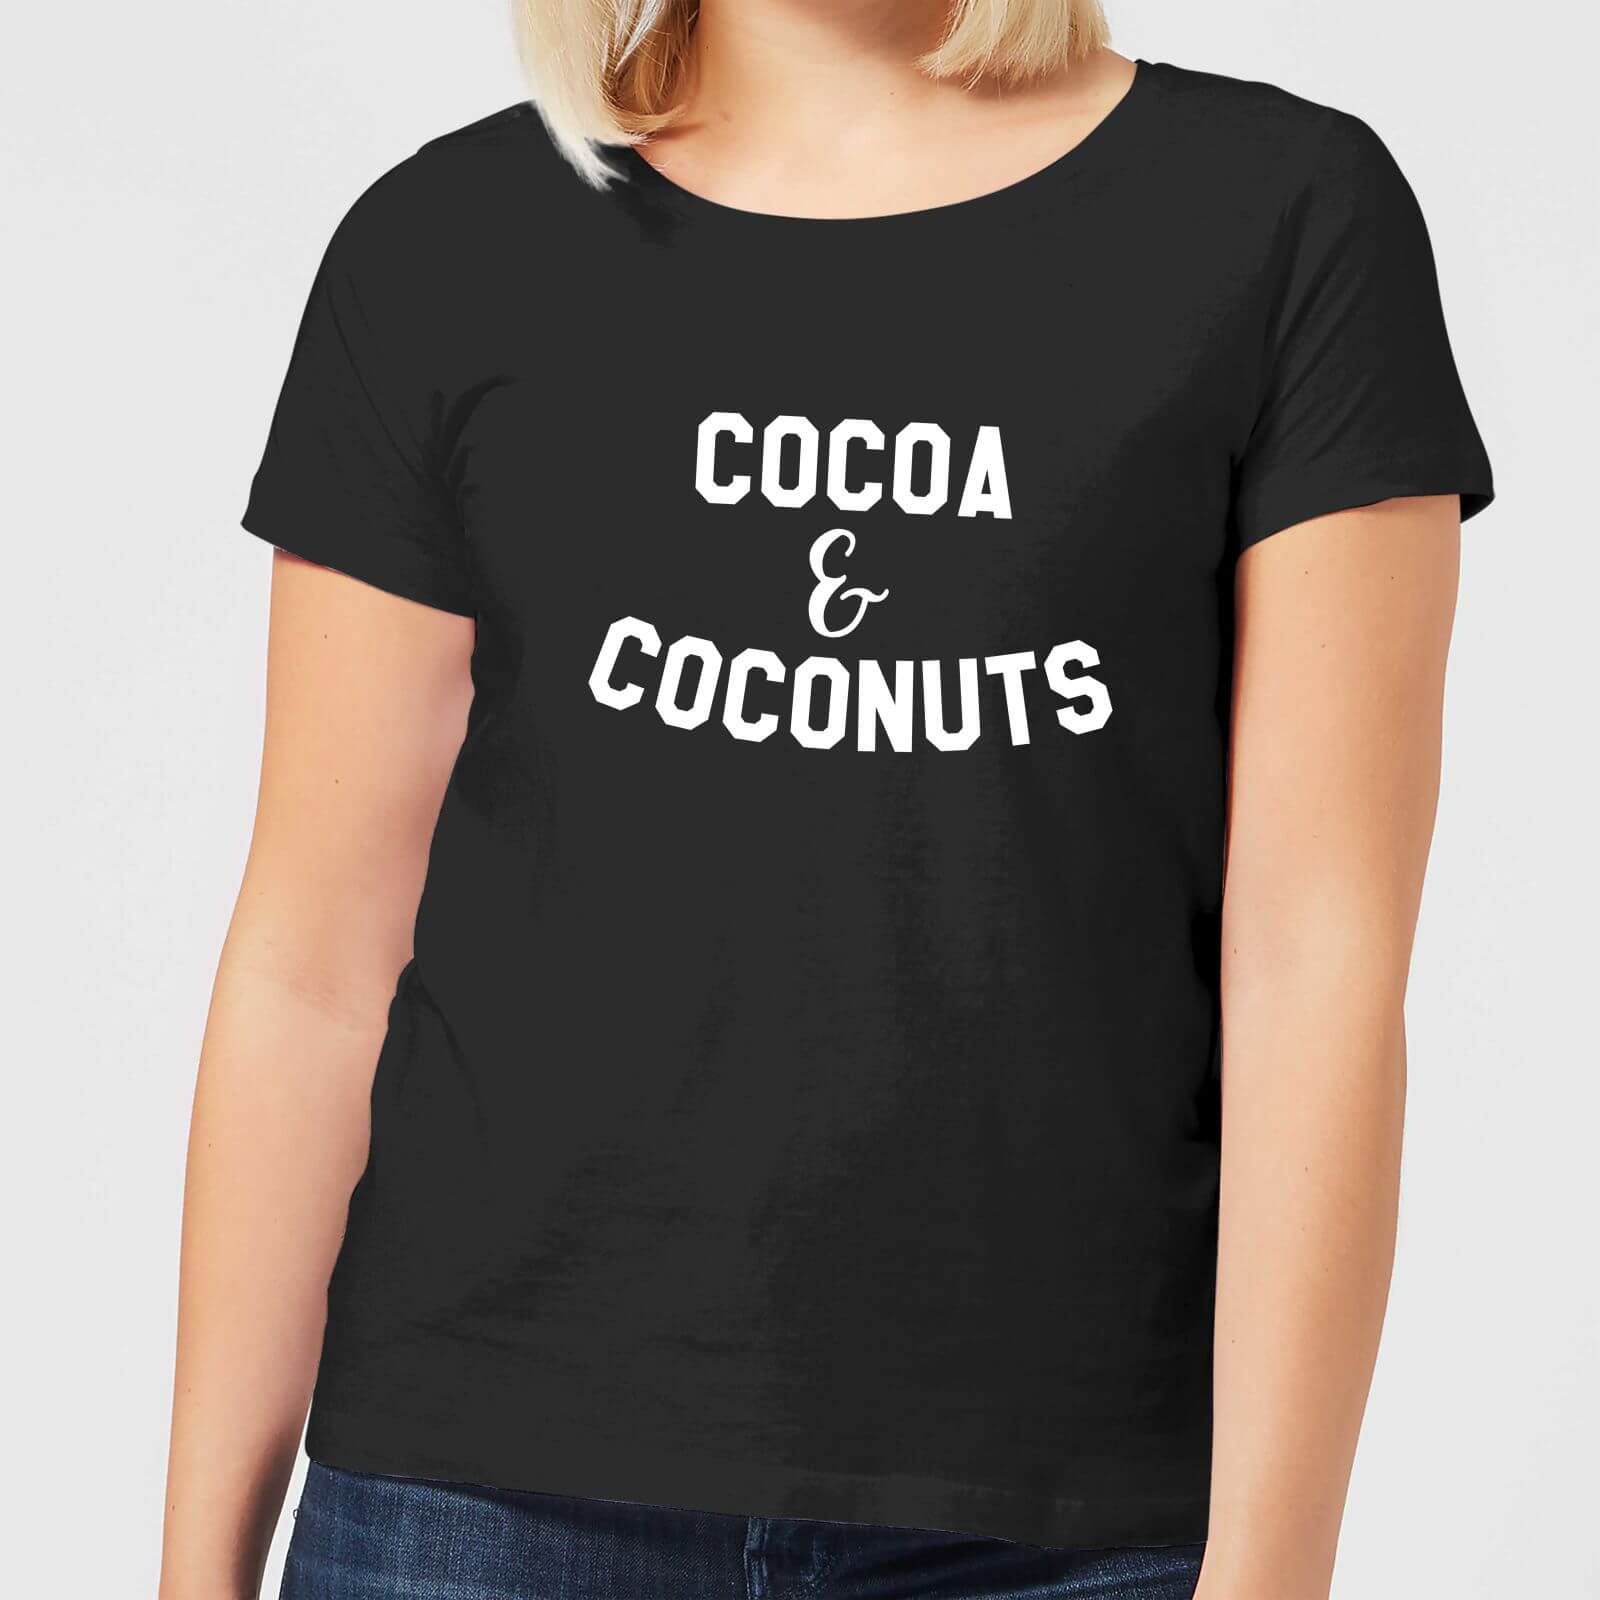 Cocoa and Coconuts Women's T-Shirt - Black - 3XL - Black